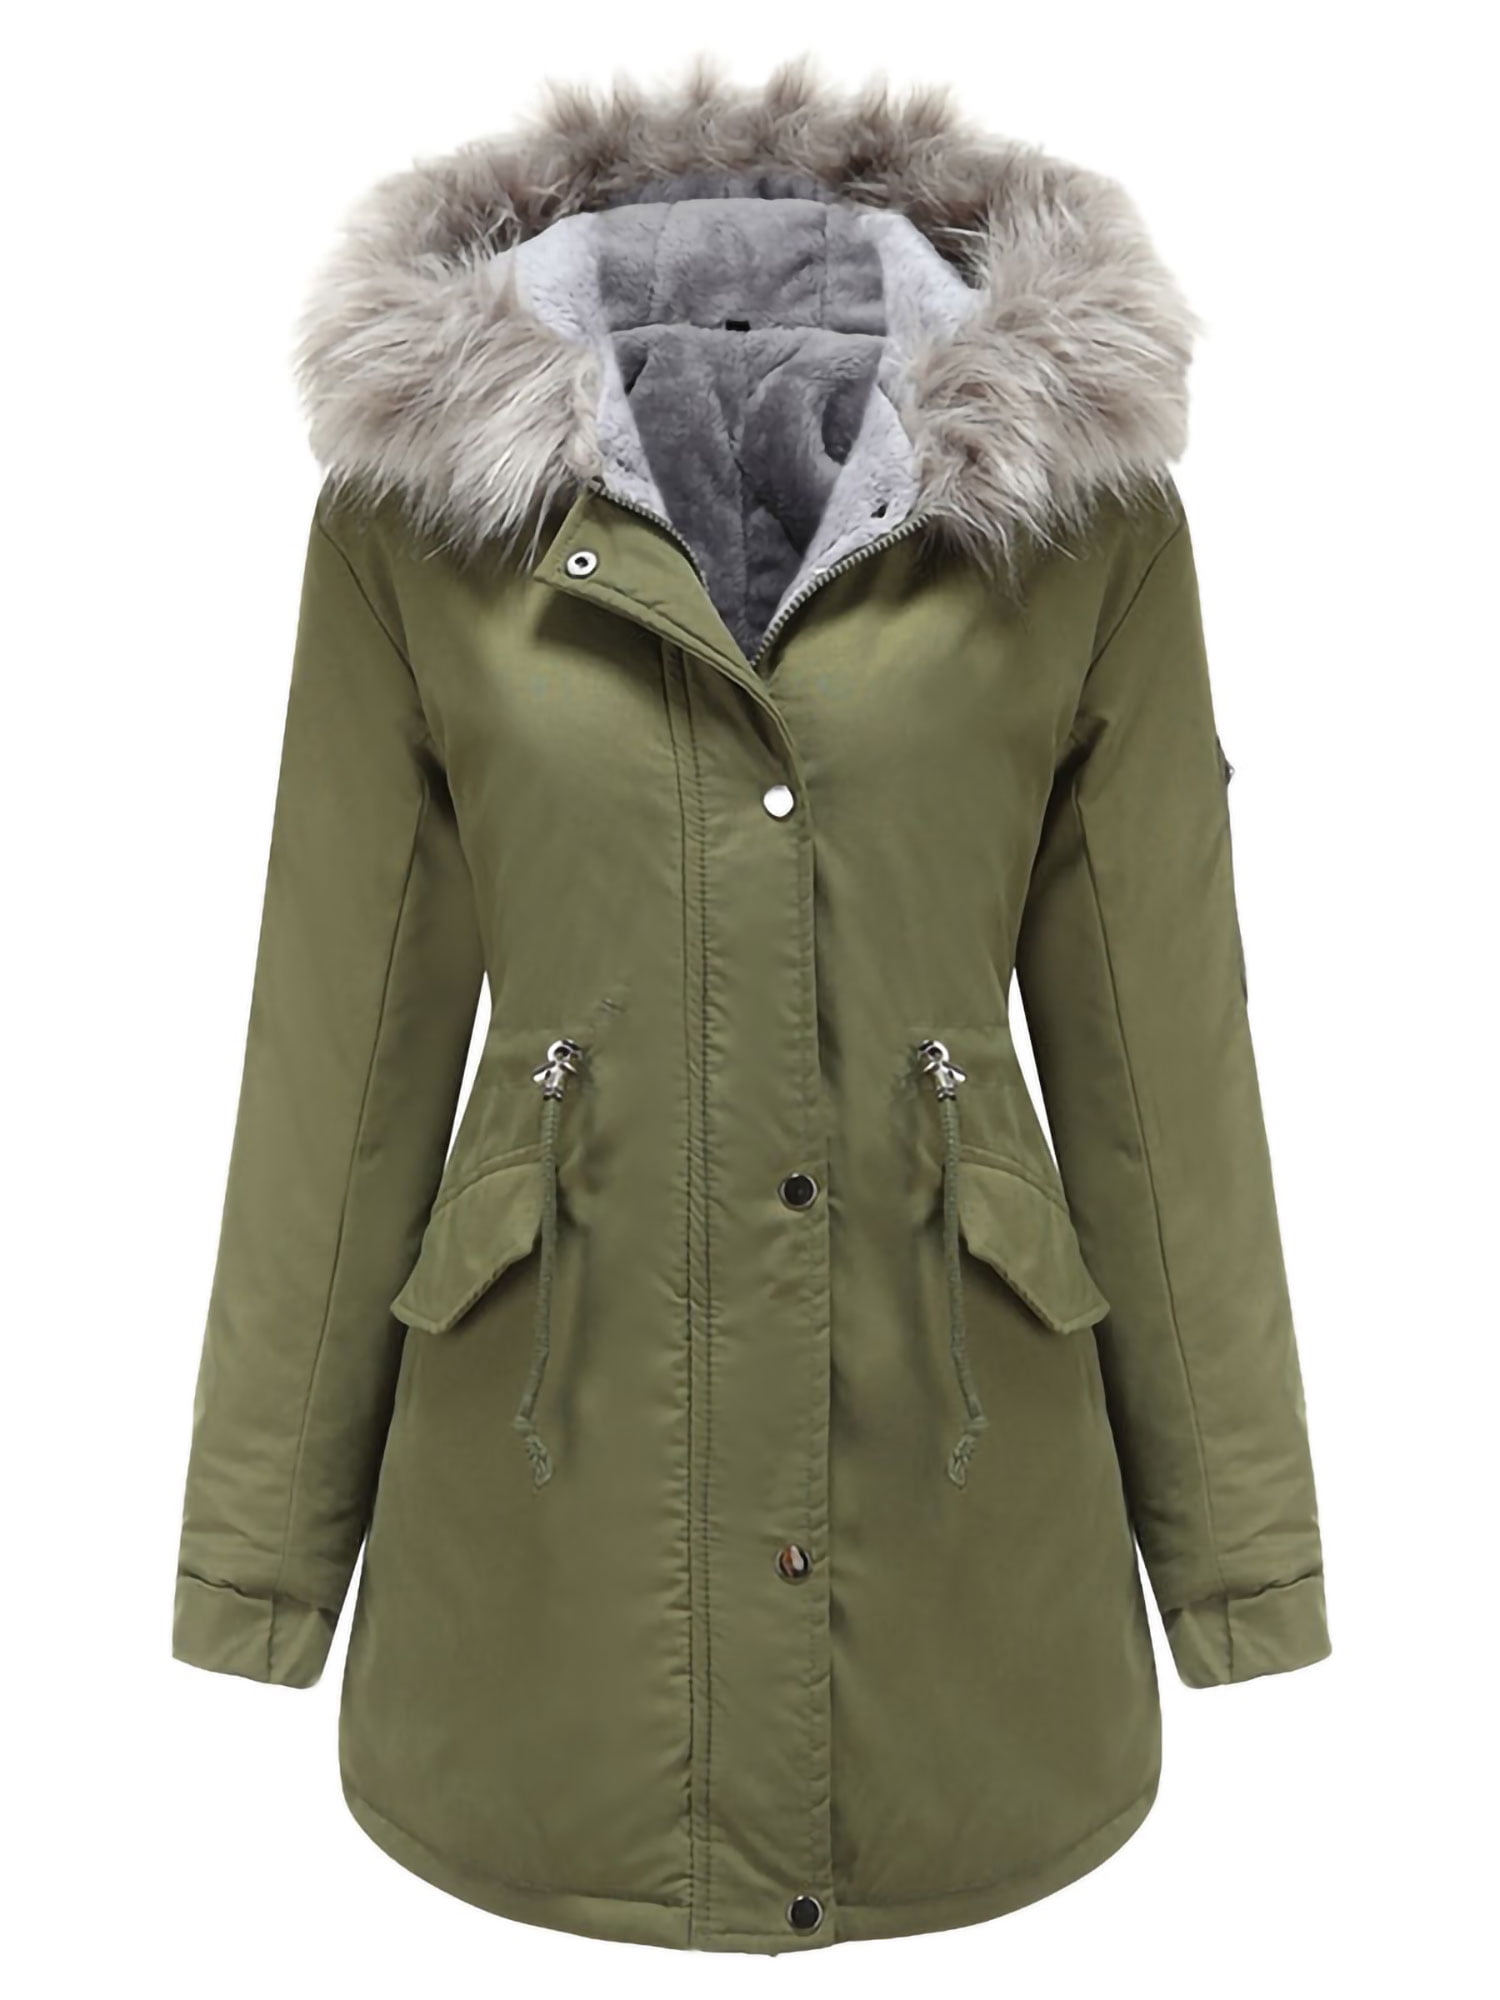 New Womens Brave Soul Parka Fur Hooded Padded Jacket Ladies Coat Size S M L XL 8 